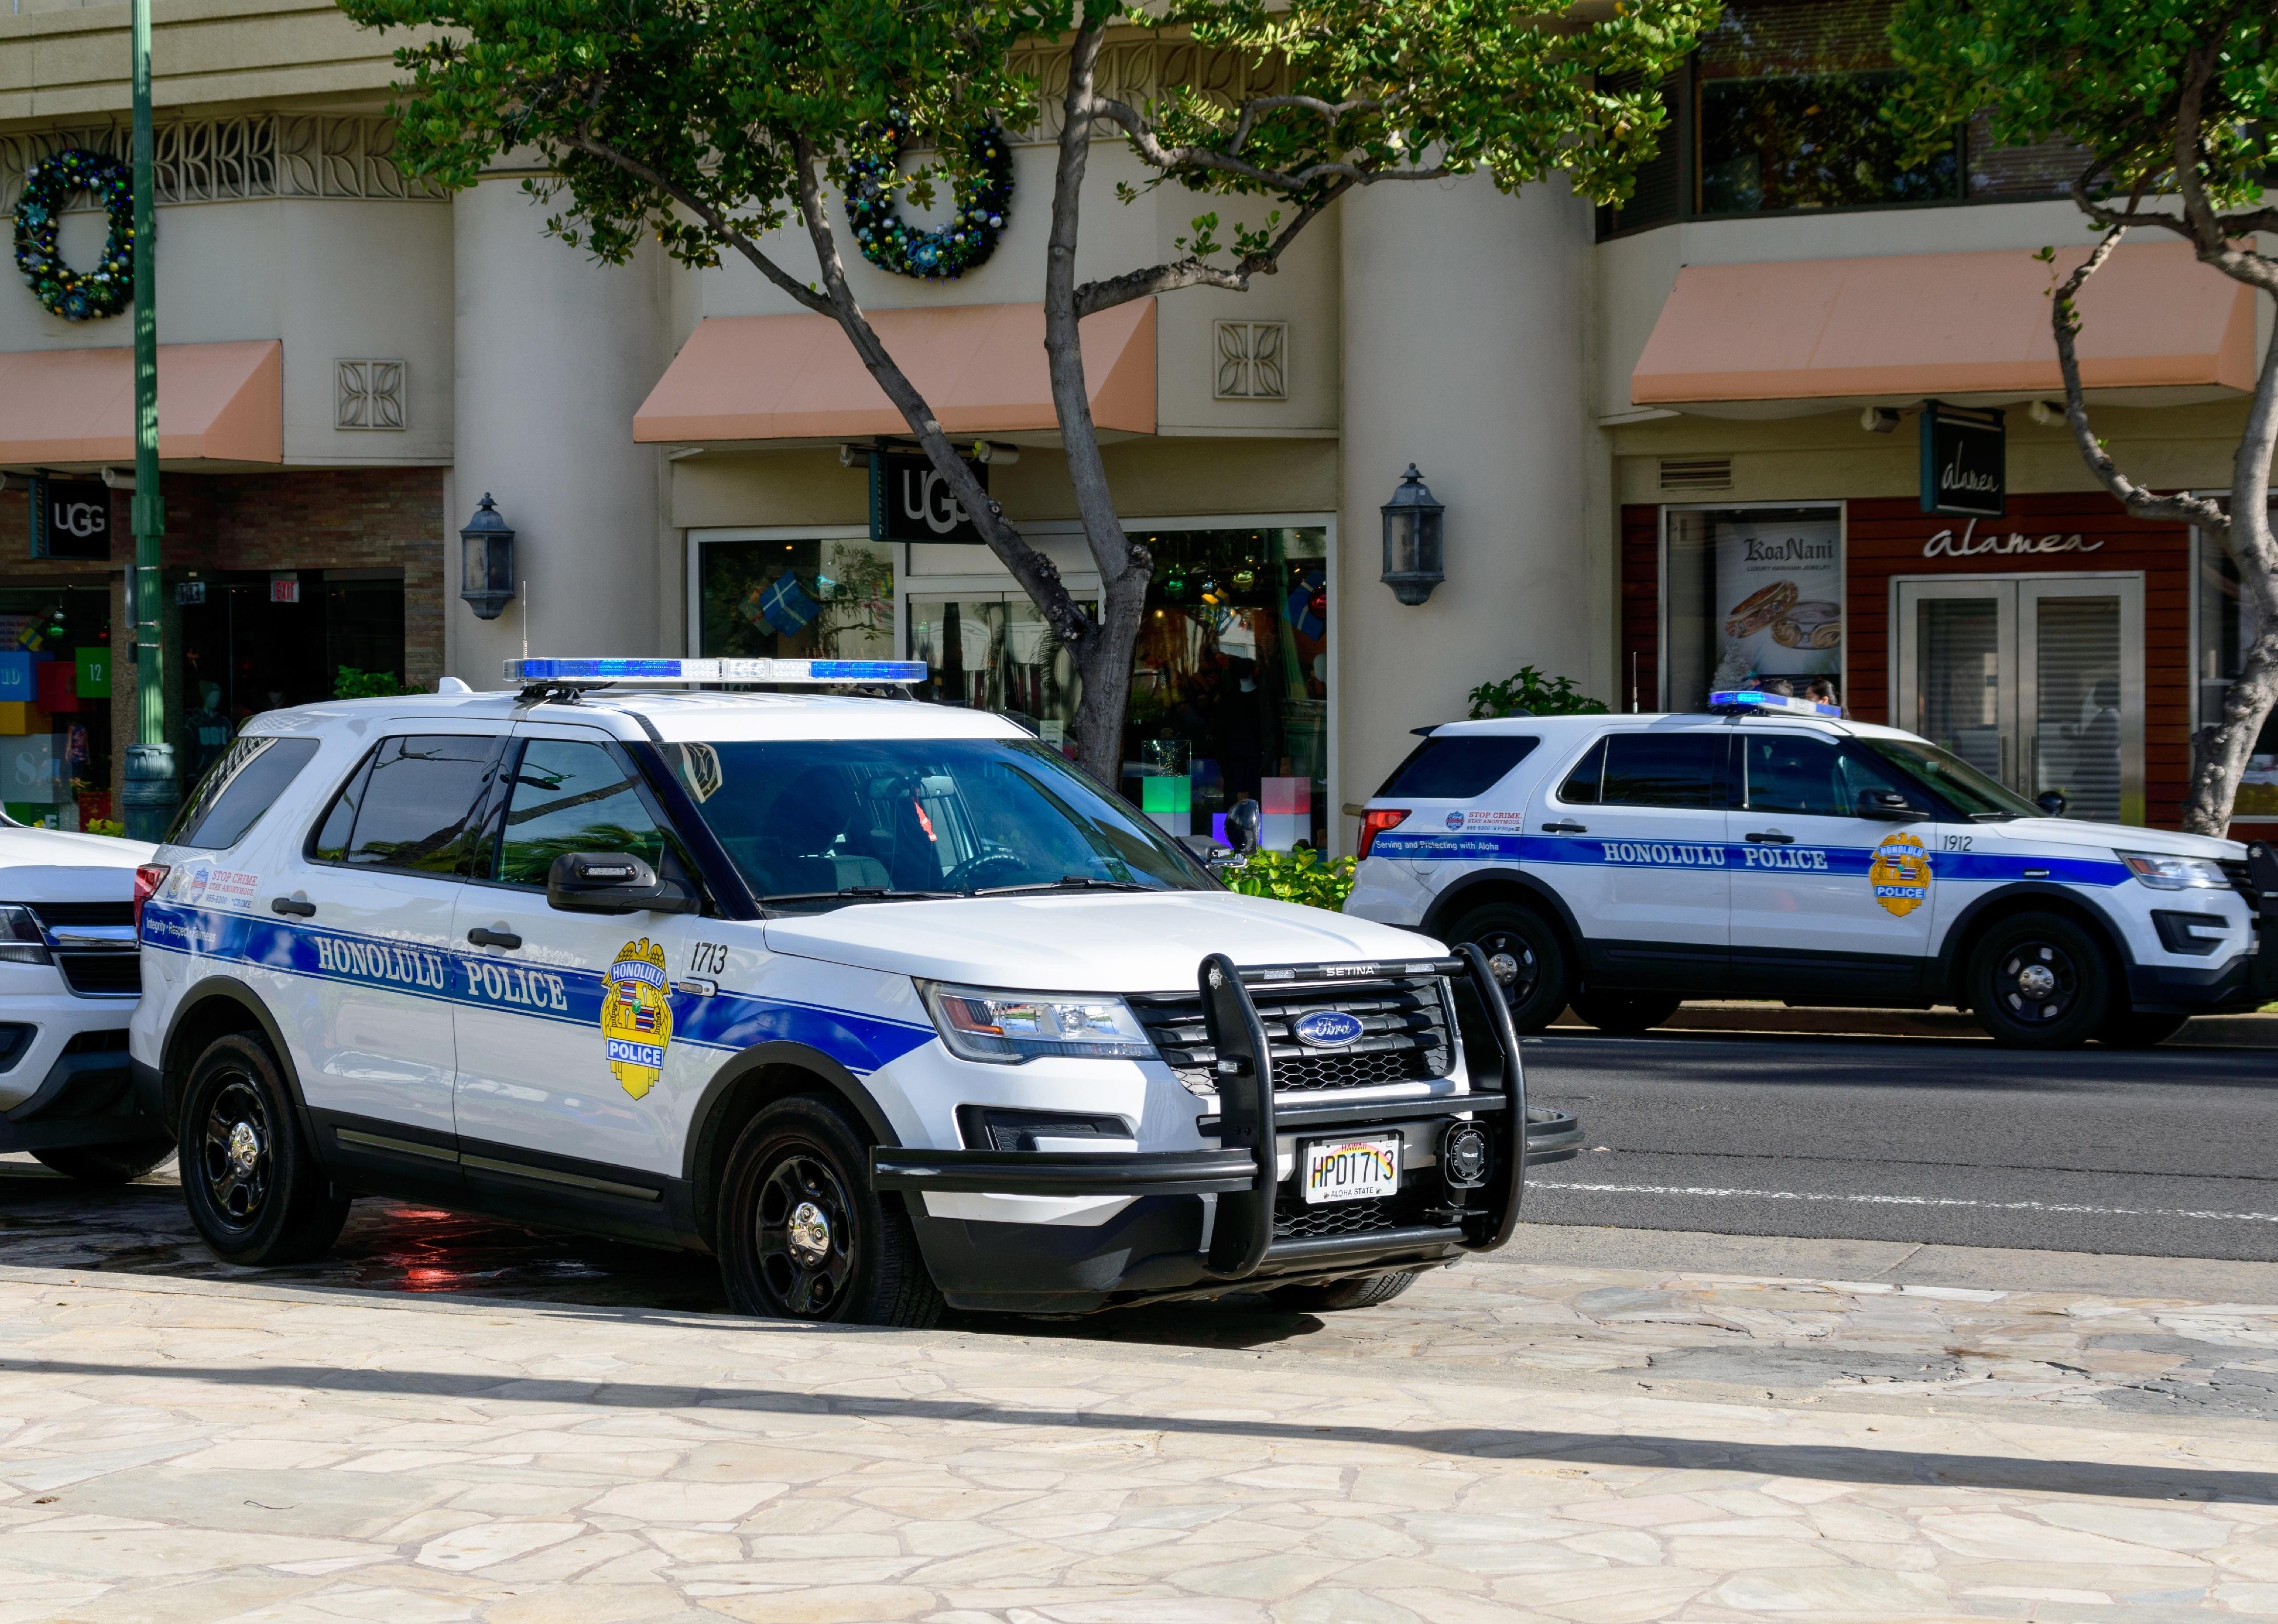 Honolulu Police Department police cars parked in Waikiki neighborhood.